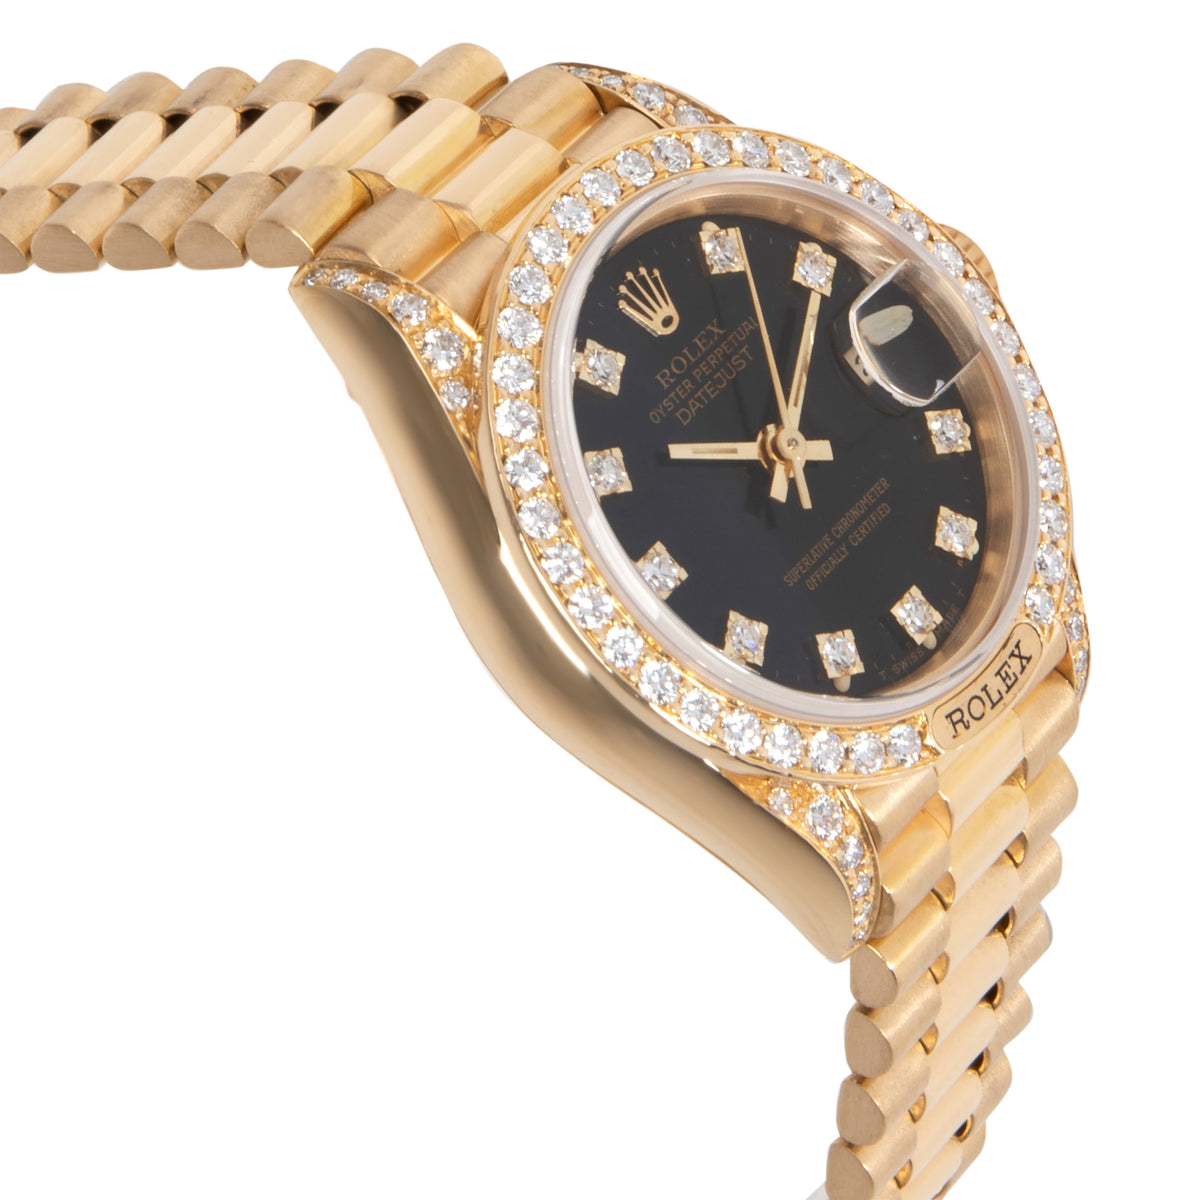 Rolex Datejust 69158 Women's Watch in 18kt Yellow Gold